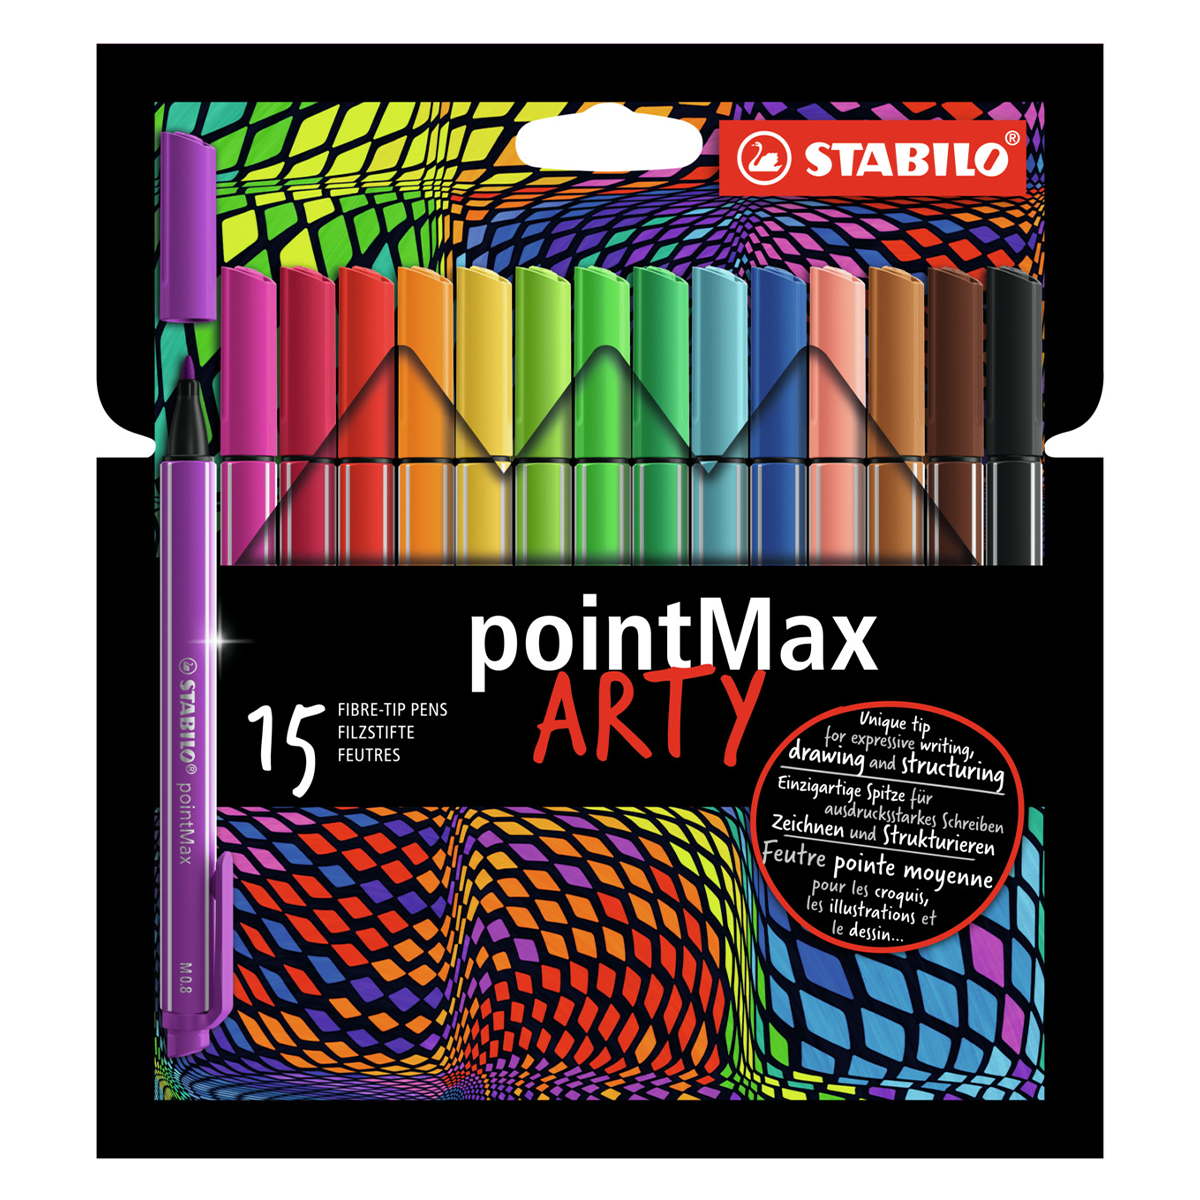 Pointmax Arty Felt-tip 15 pcs in the group Pens / Artist Pens / Felt Tip Pens at Pen Store (127795)